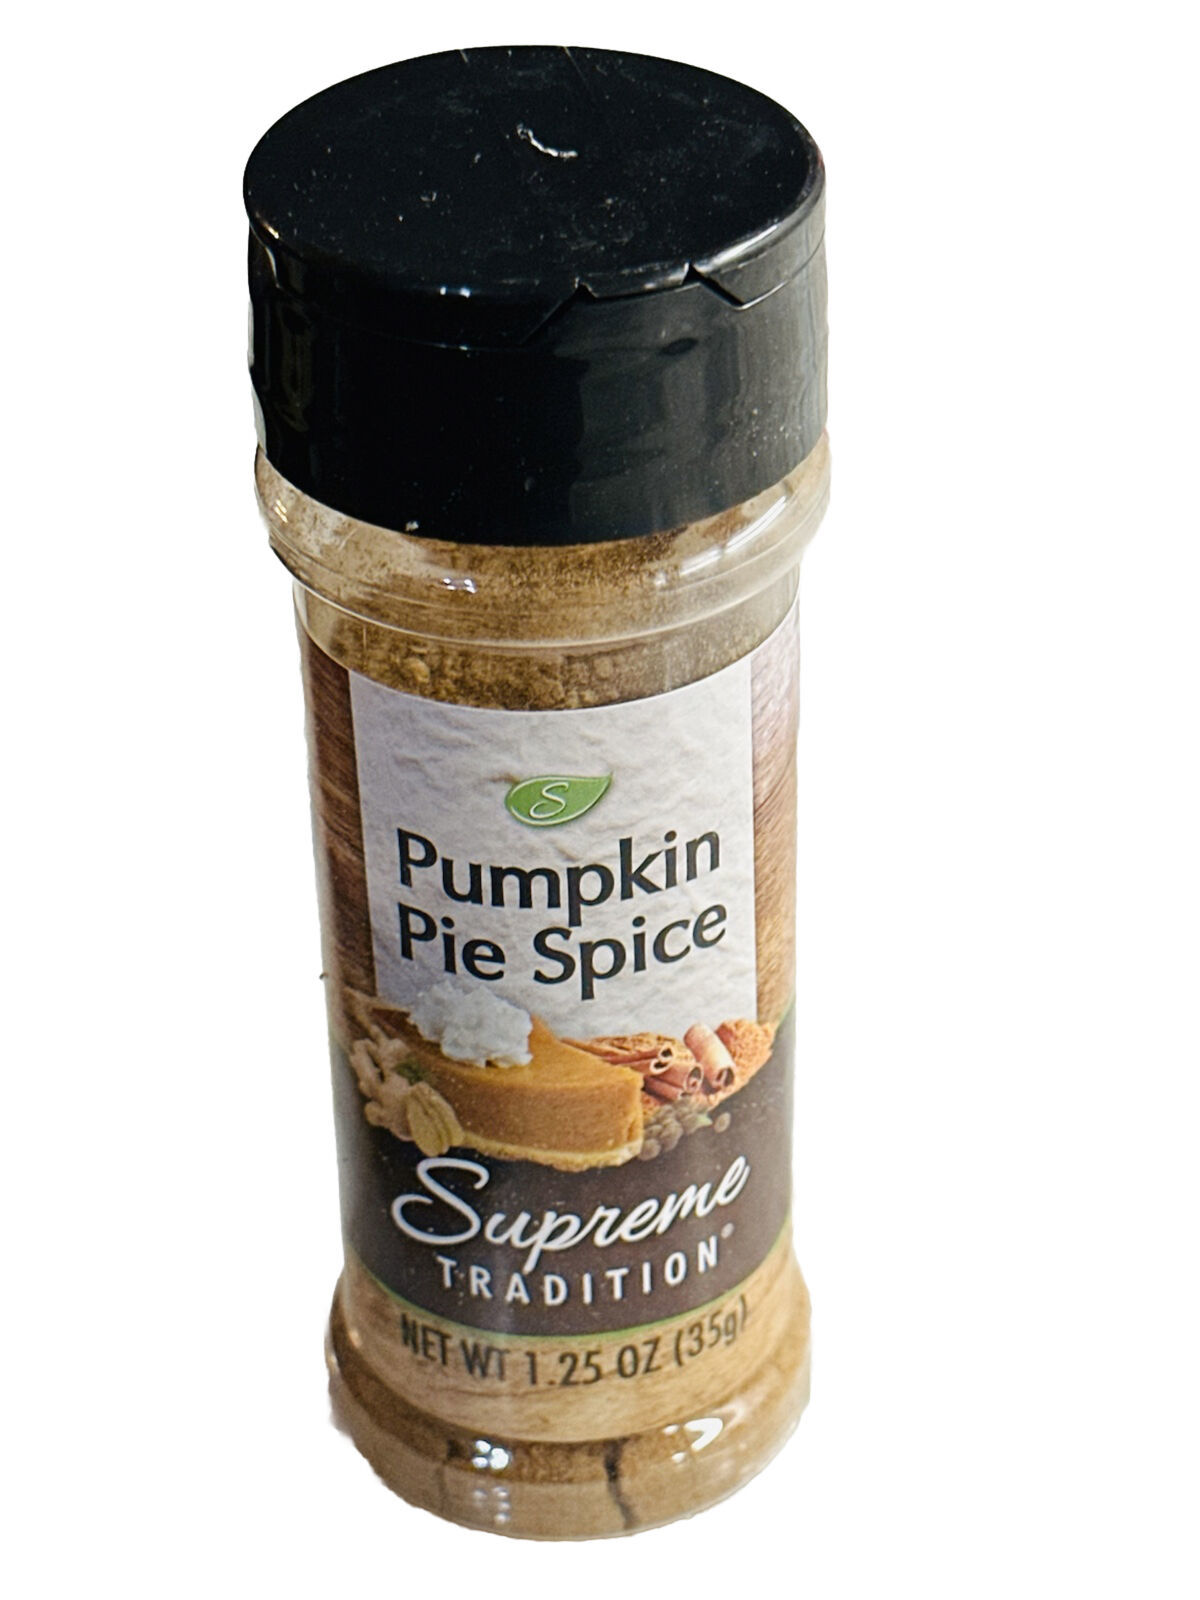 Pumpkin Pie Spice Supreme Tradition 1.25oz/35gm - $8.79